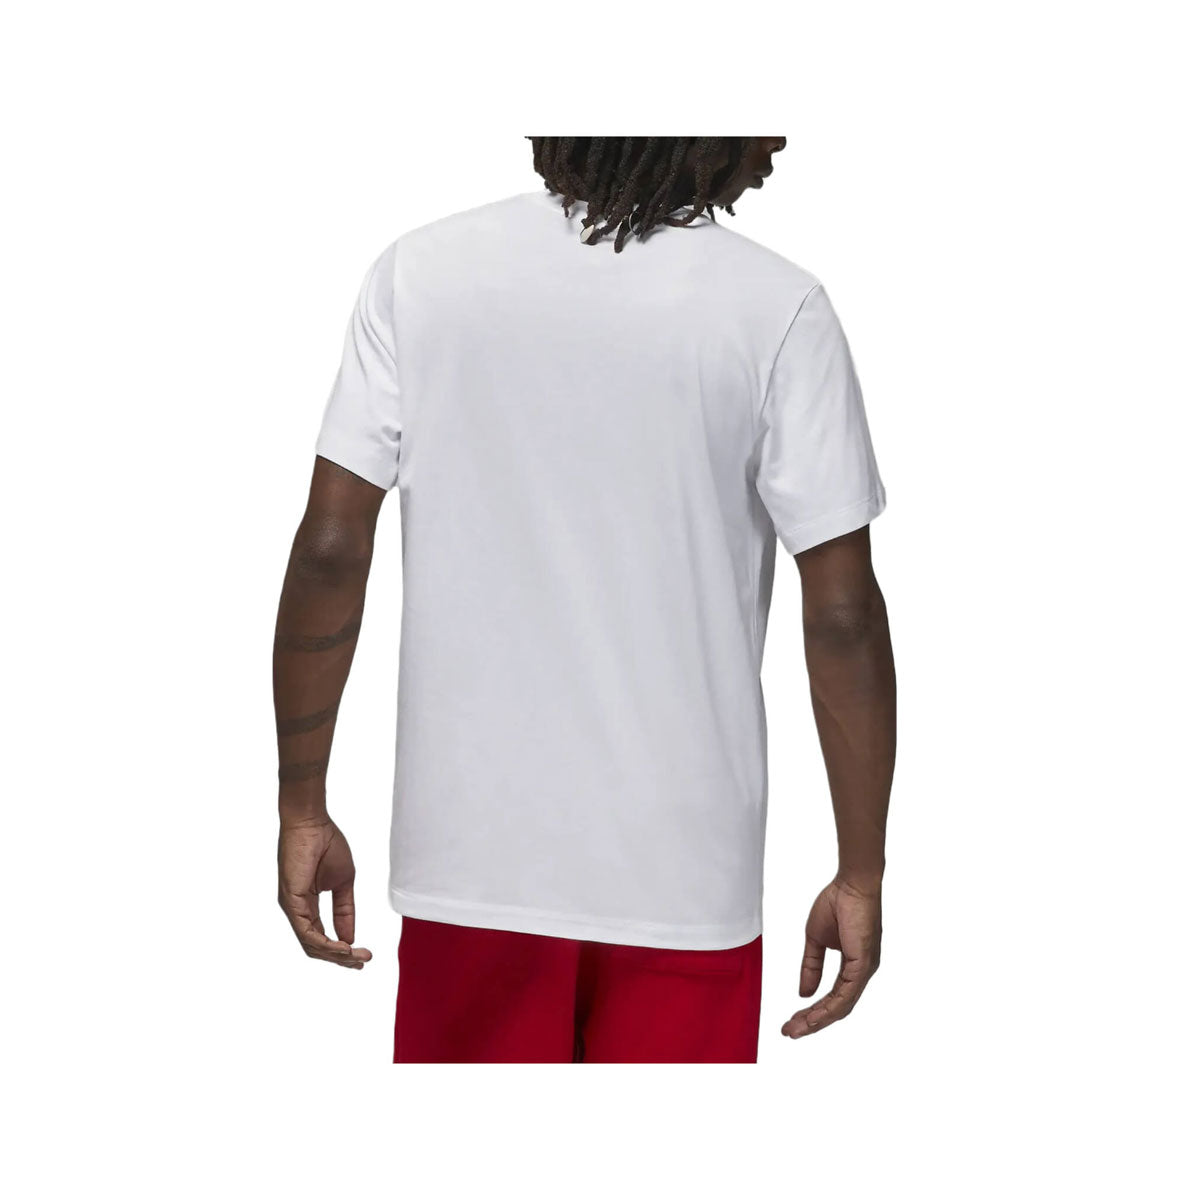 Jordan Men's Essentials Printed T-Shirt